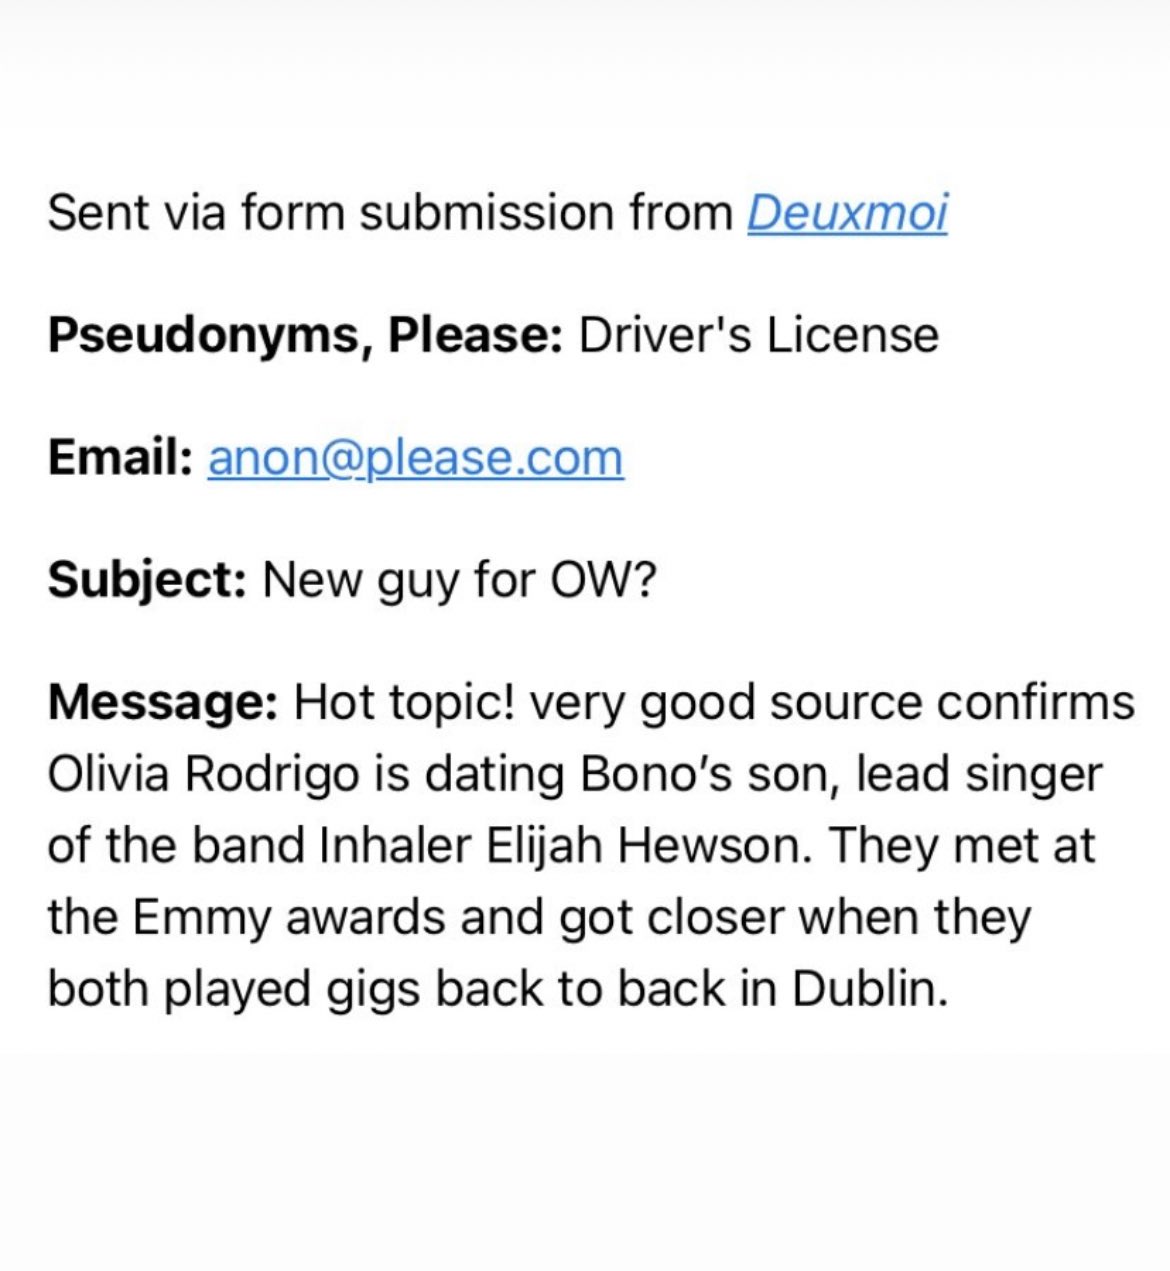 Deuxmoi's source revealed that Olivia Rodrigo might be dating Elijah Hewson.